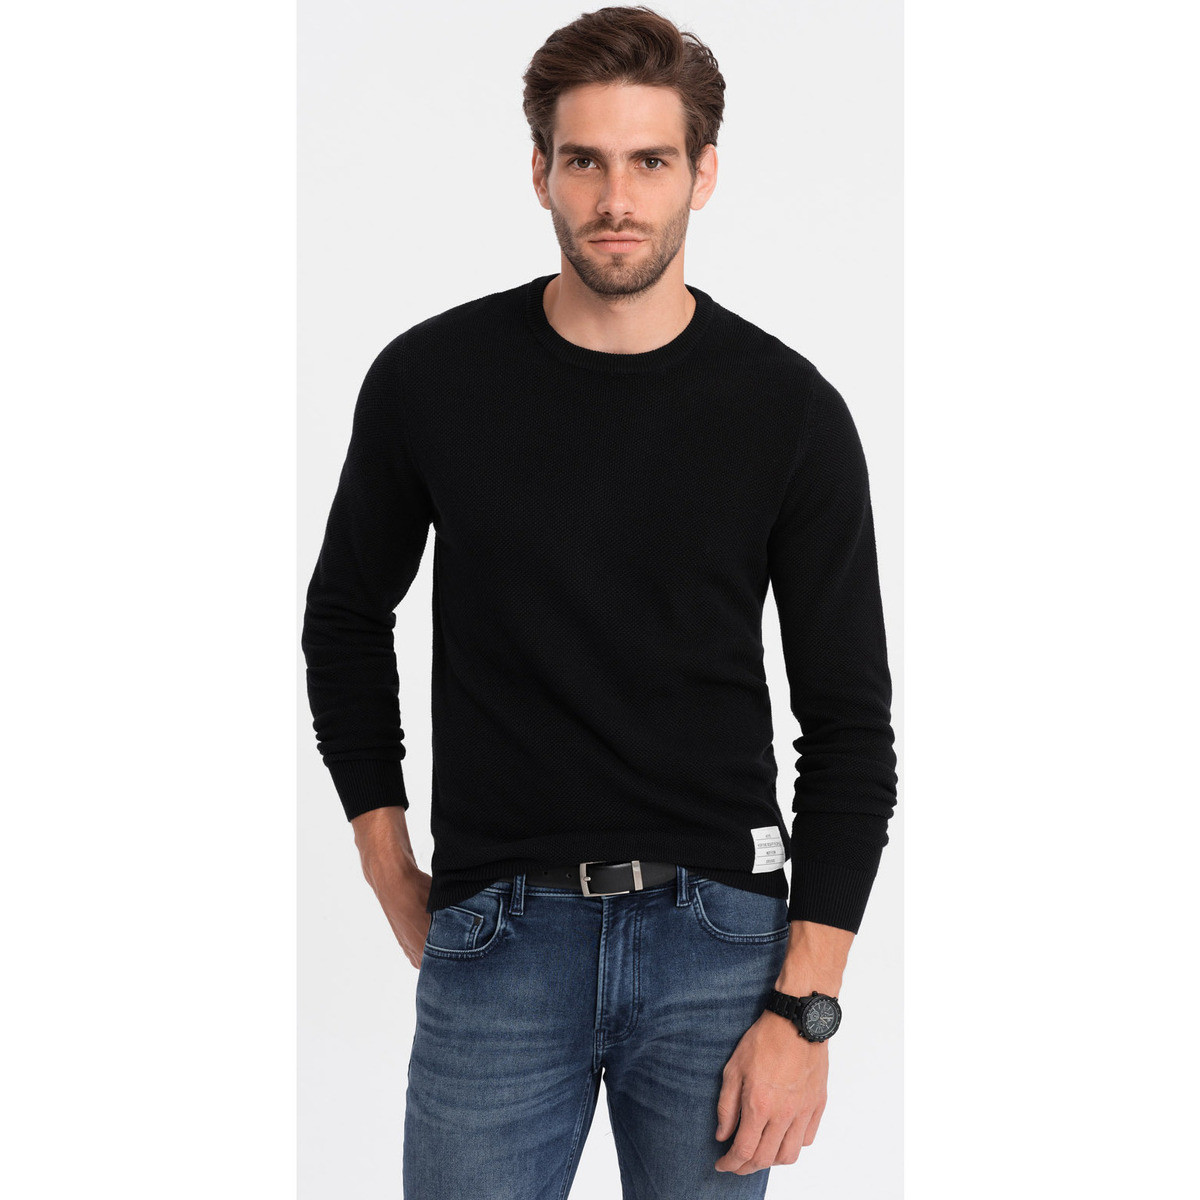 Ombre  Men apos;s textured sweater with half round neckline - black V4  ruznobarevne